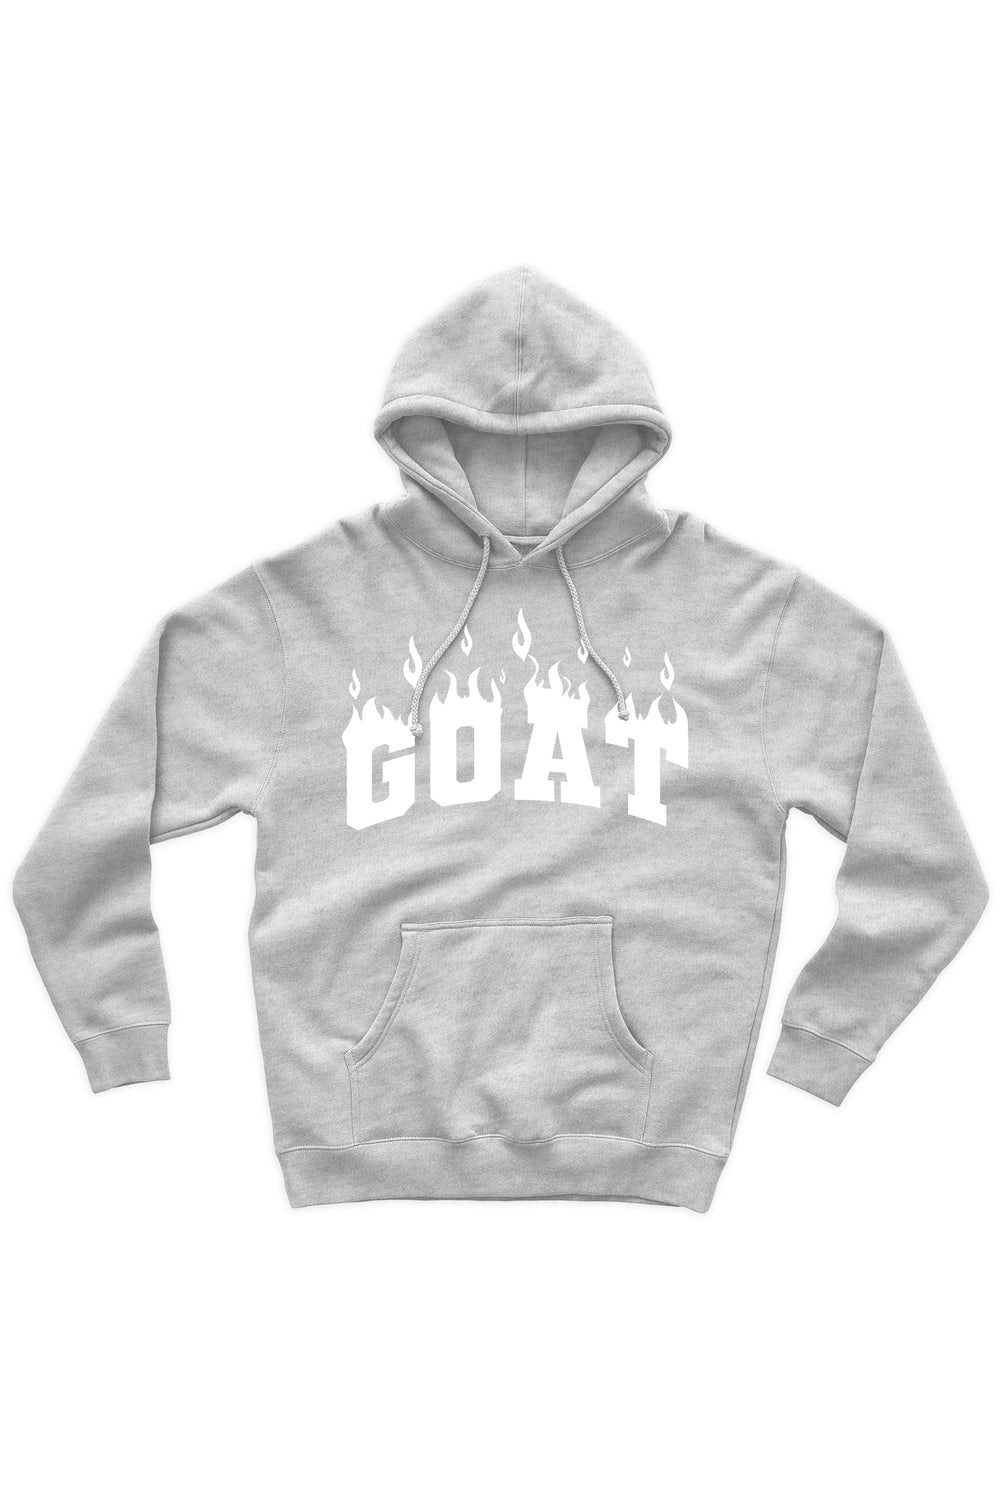 Goat Flame Hoodie (White Logo) - Zamage